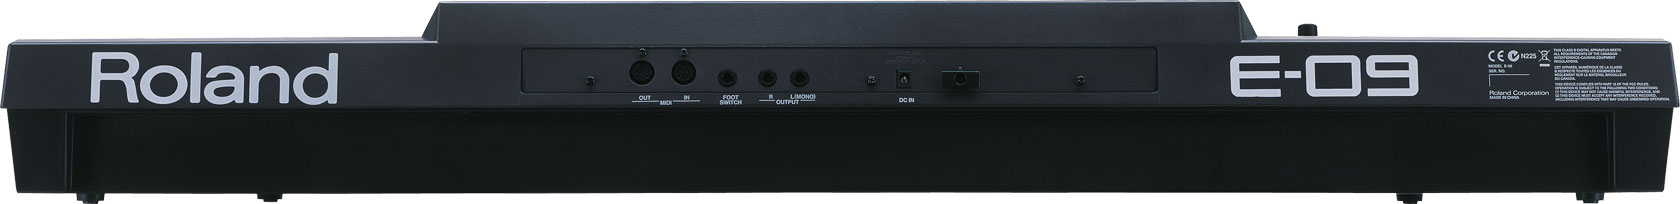 ROLAND JV 30 35 50 80 90 1000 XP XPS XV88 G1000 G70 JW50 E09 synthesizer MAGNET 